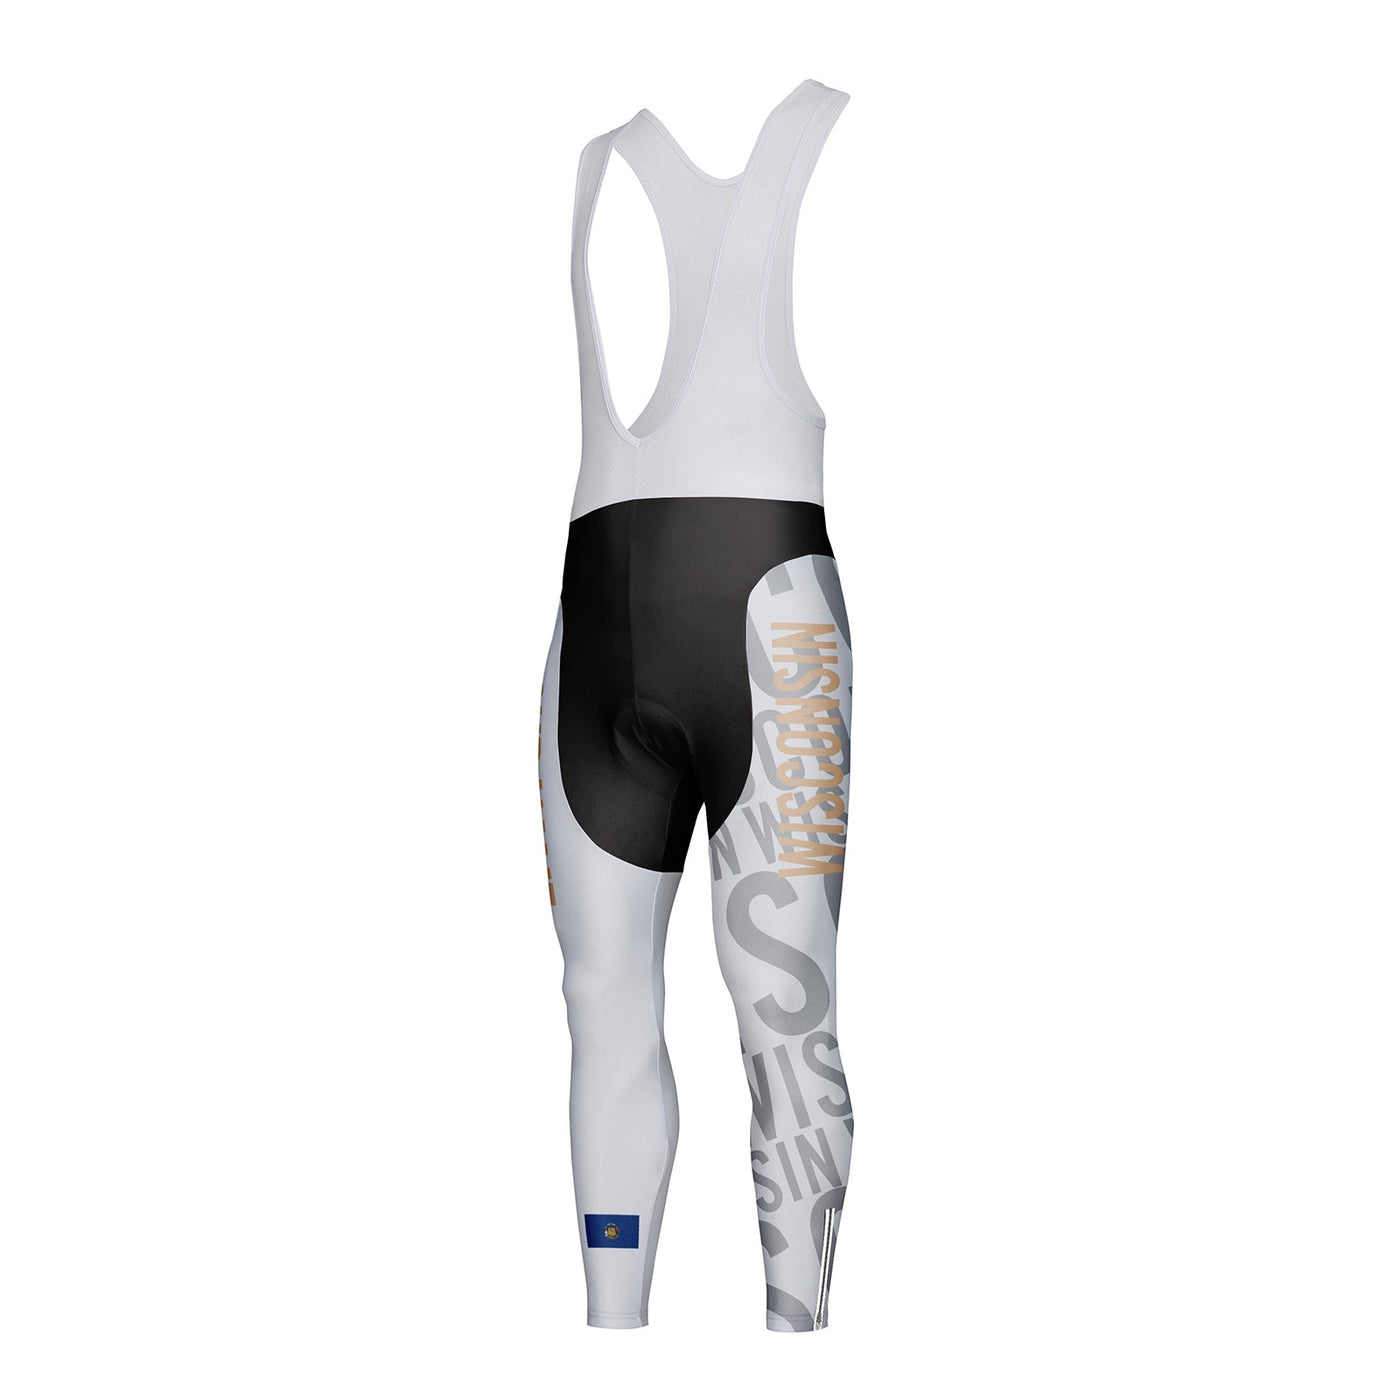 Customized Wisconsin Unisex Thermal Fleece Cycling Bib Tights Long Pants